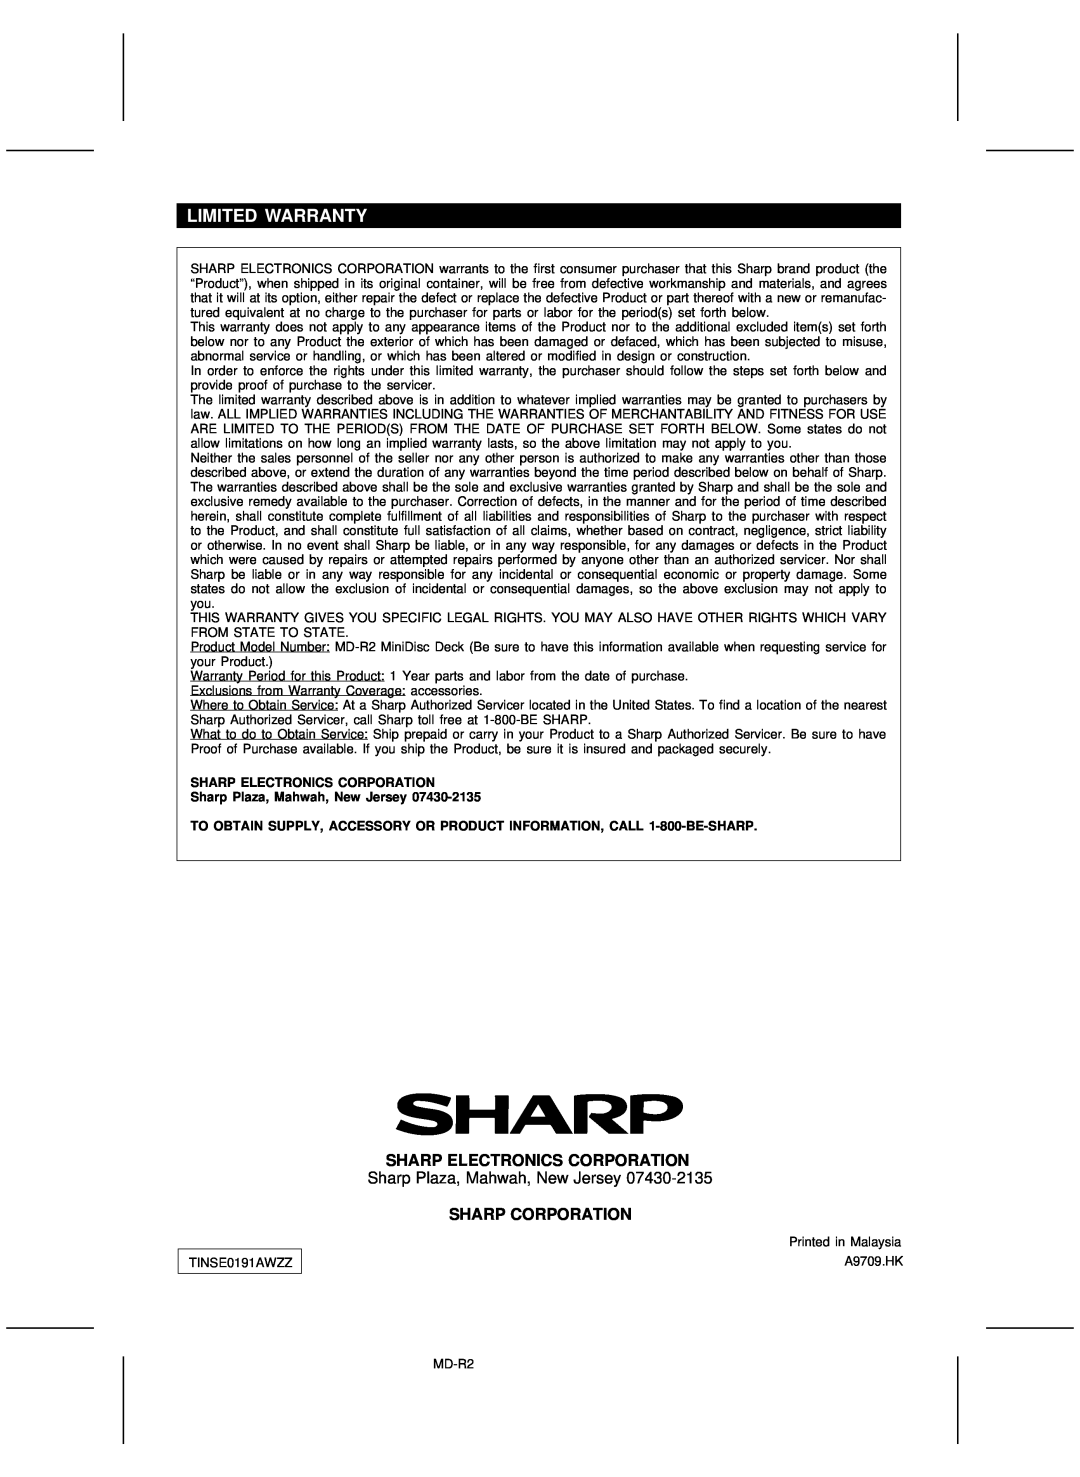 Kenwood MD-R2 Limited Warranty, Sharp Electronics Corporation, Sharp Corporation, Sharp Plaza, Mahwah, New Jersey 